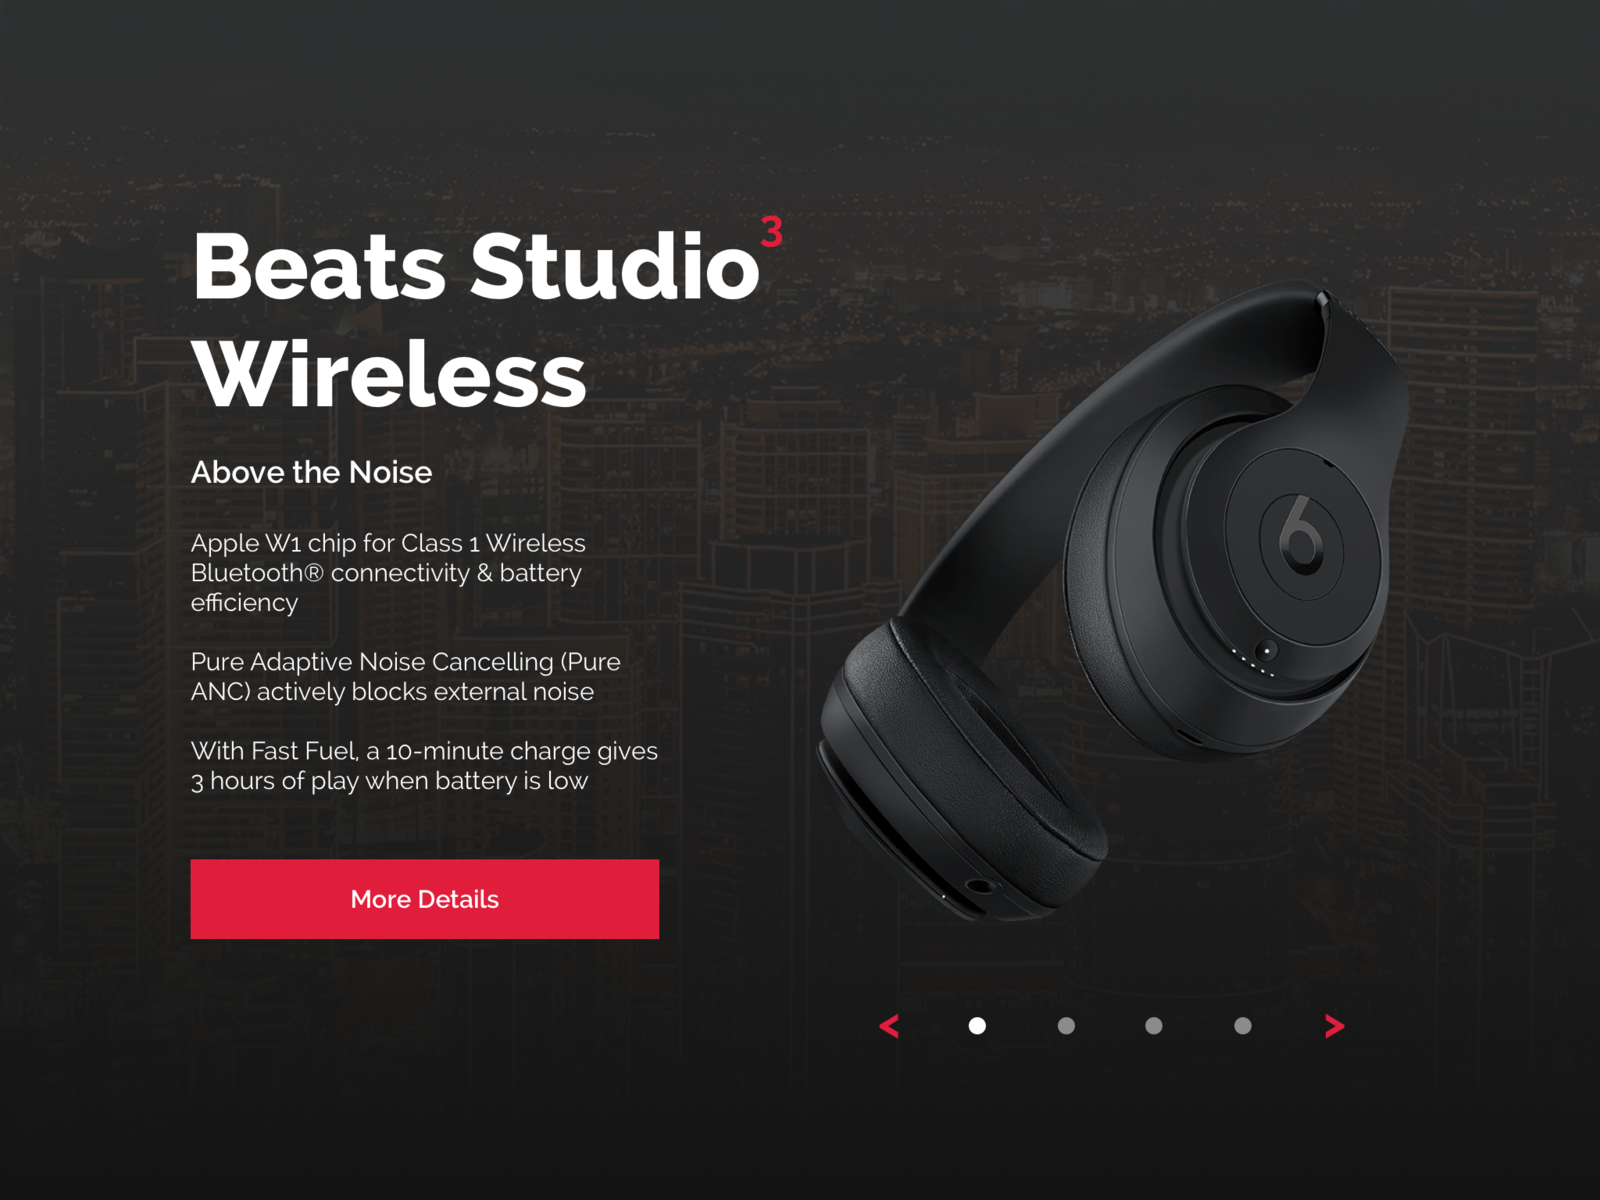 Beats Studio Wireless Product Page by Leandro Fernandez on Dribbble